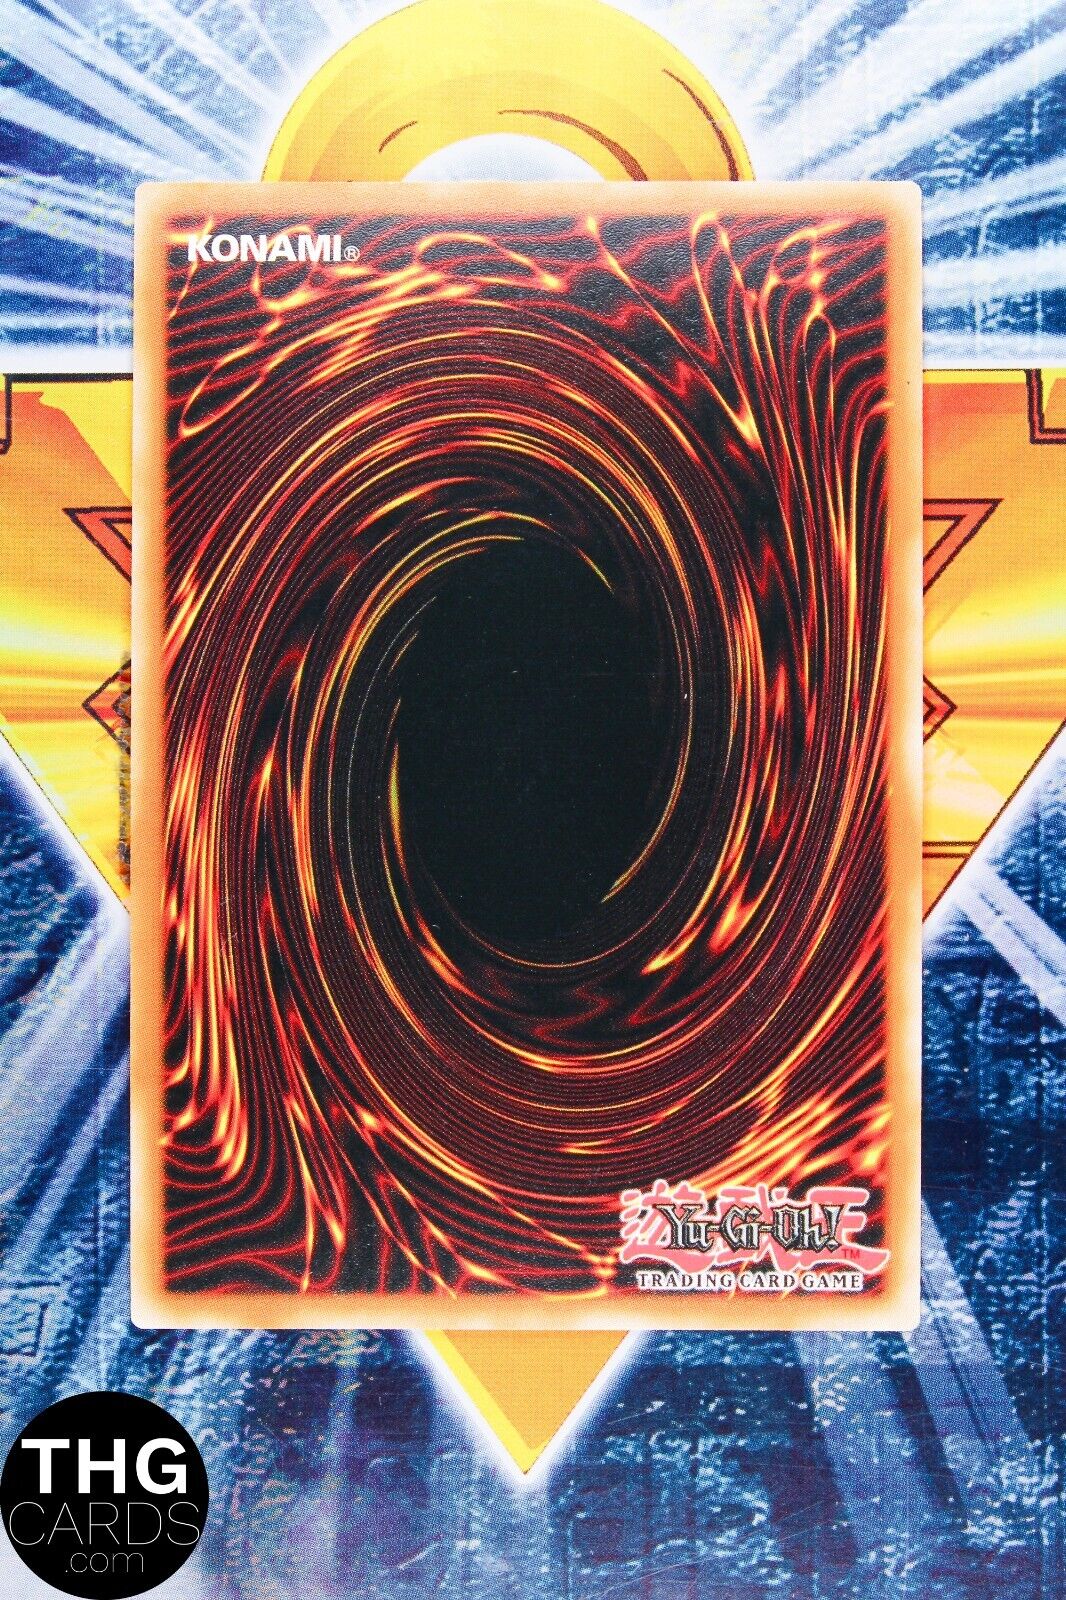 Danger!? Jackalope? RA01-EN013 1st Ed Super Rare Yugioh Card Playset